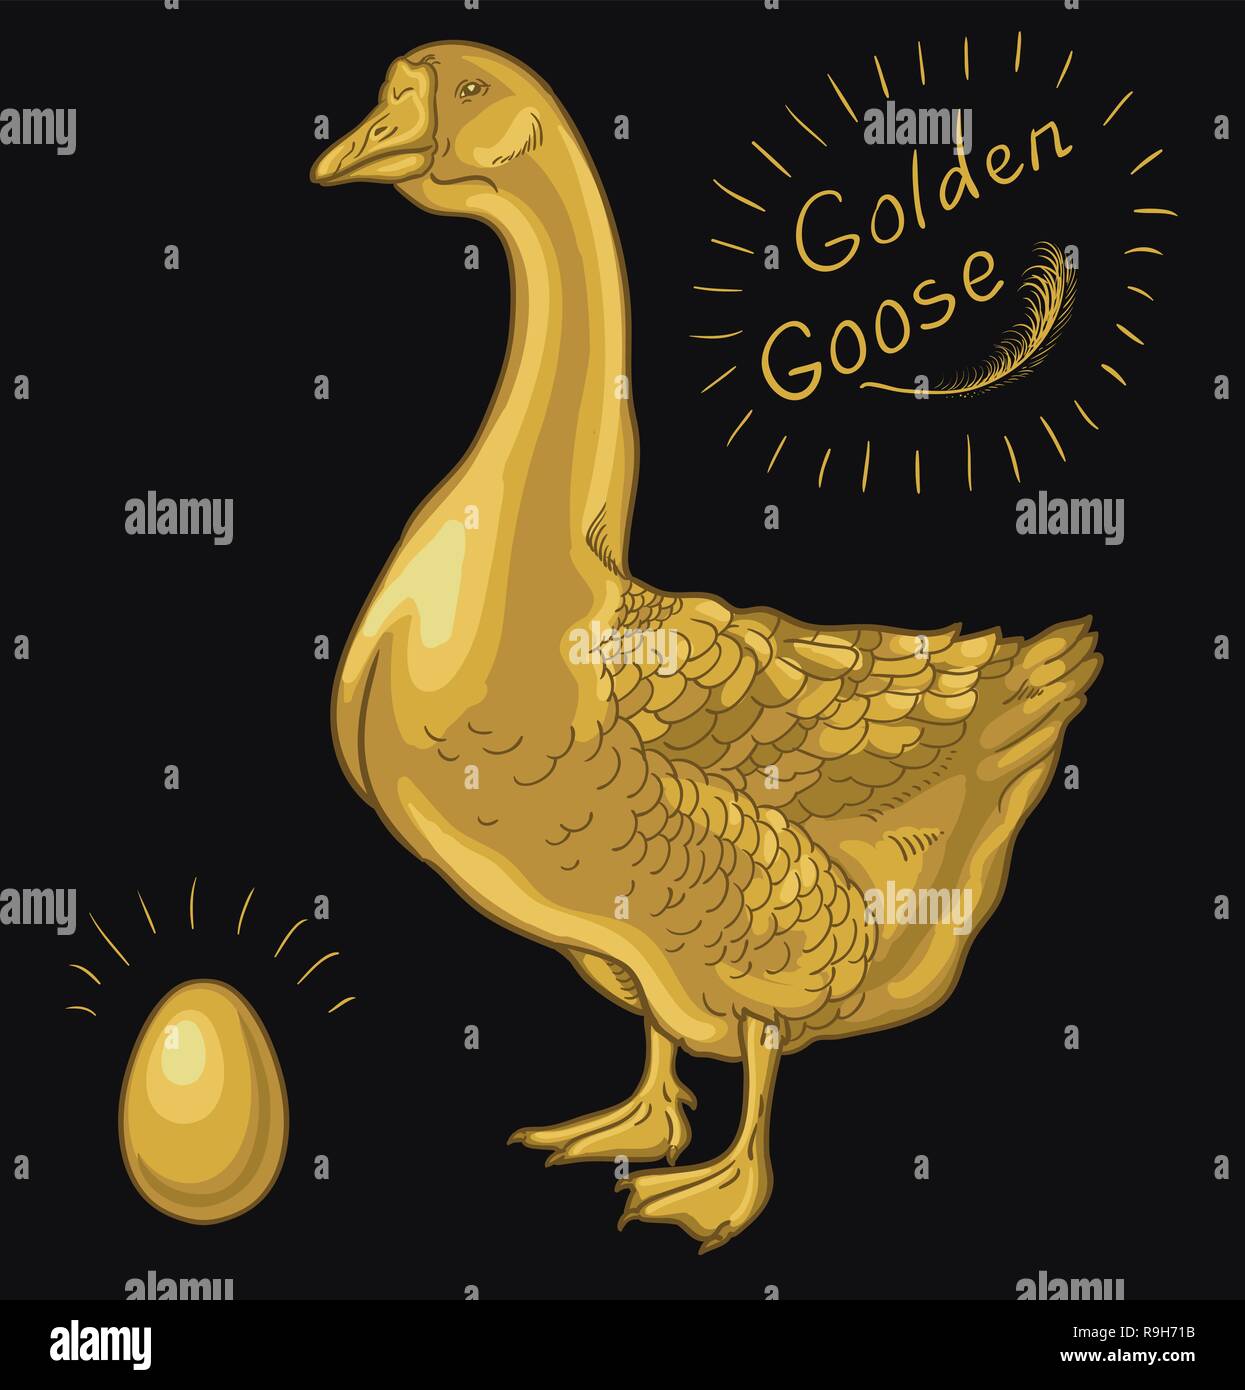 Golden goose egg Stock Vector Images - Alamy